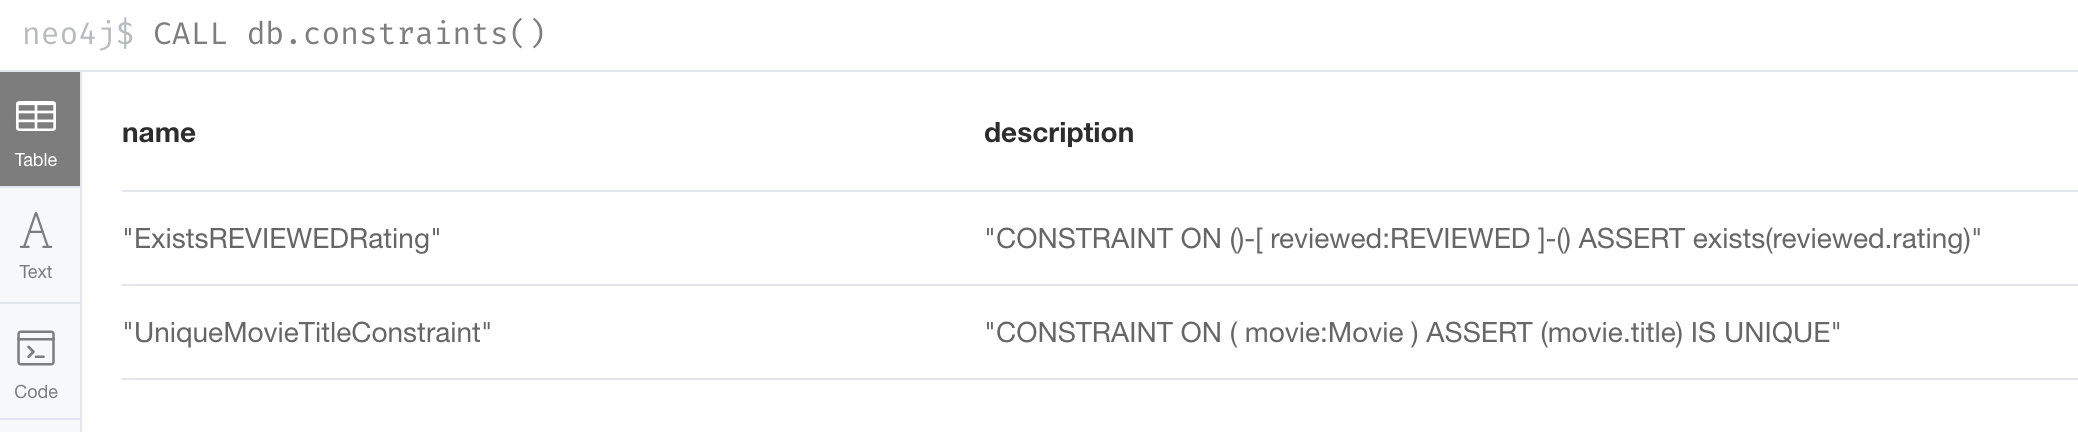 call_db_constraints